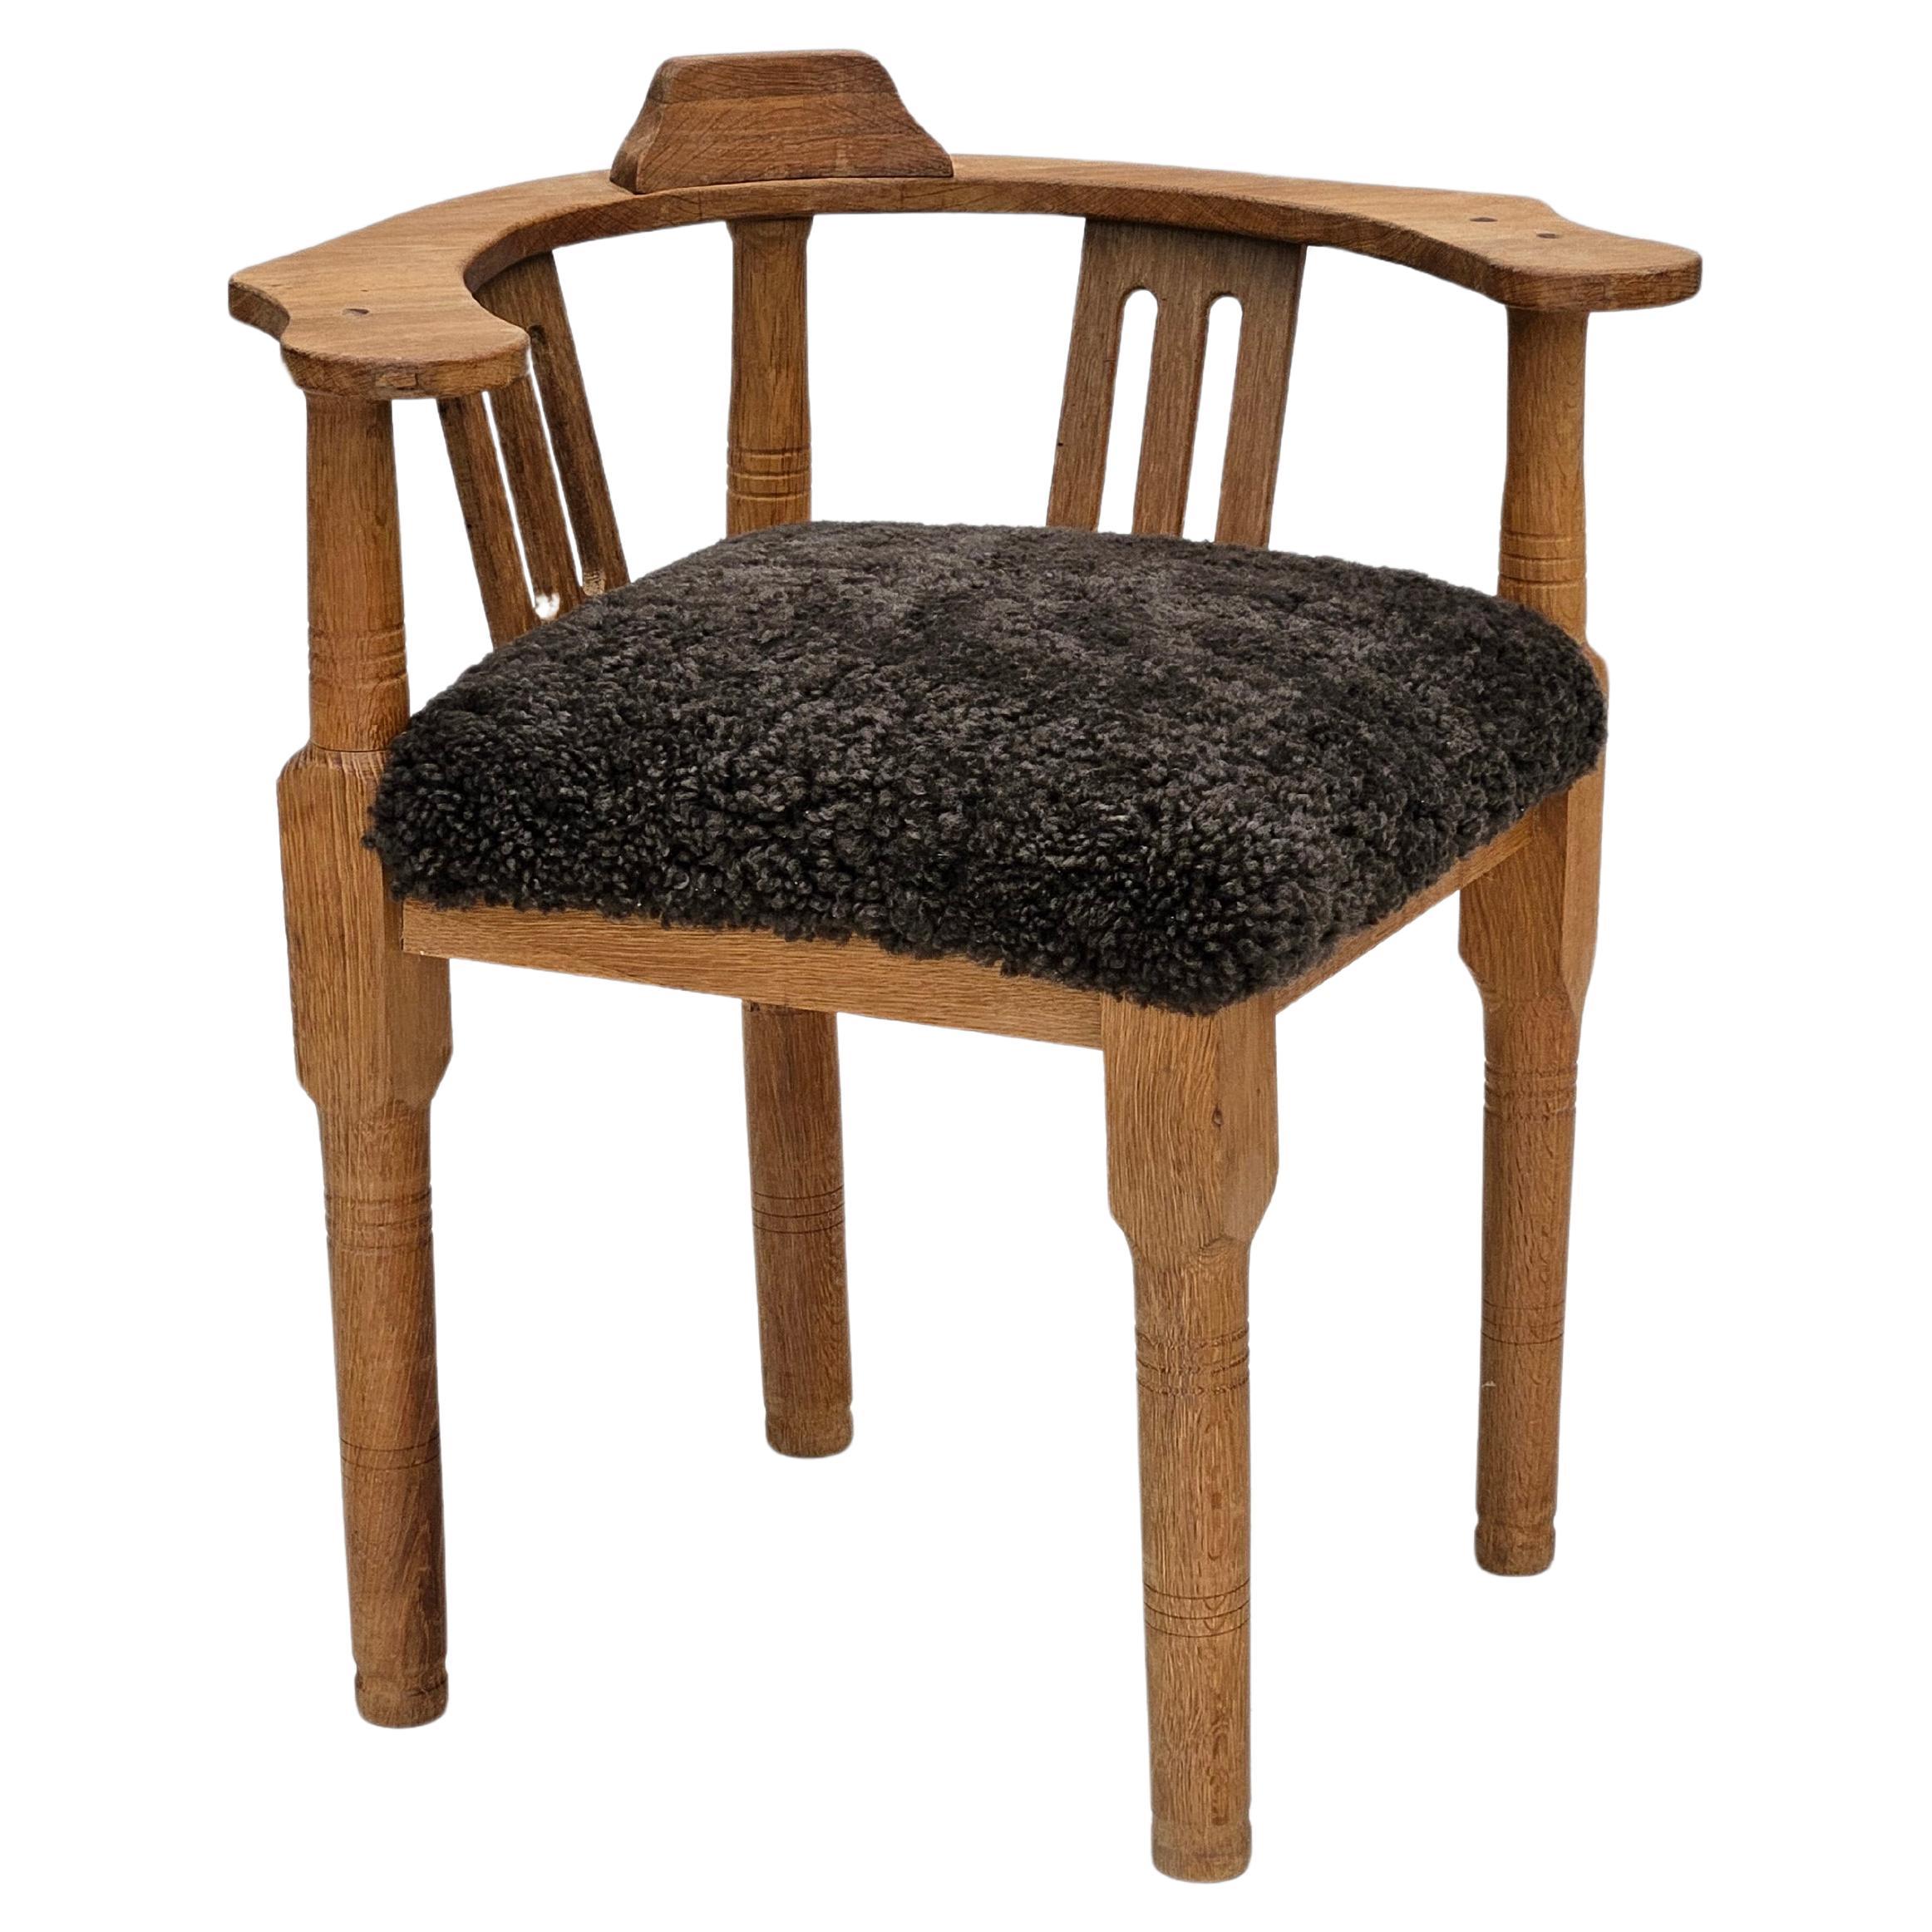 1950s, Danish design, reupholstered armchair, New Zealand sheepskin, oak wood. For Sale